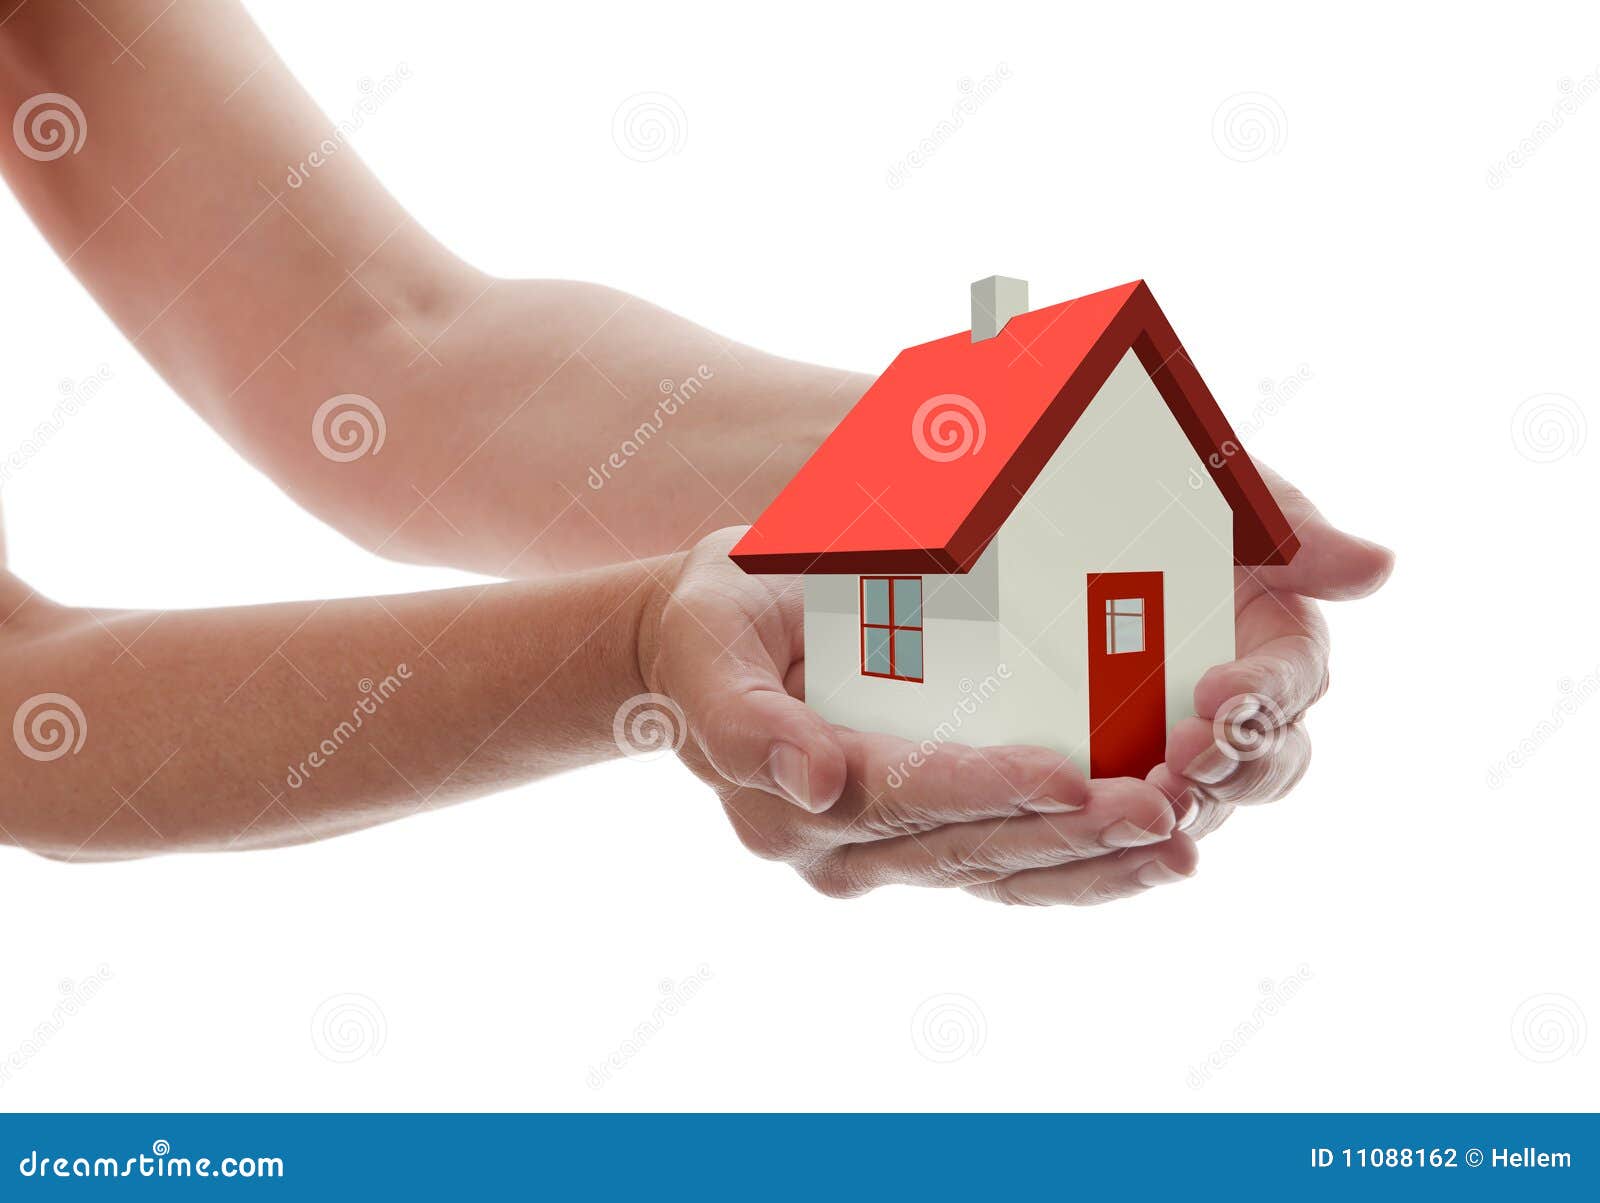 https://thumbs.dreamstime.com/z/hands-holding-house-11088162.jpg